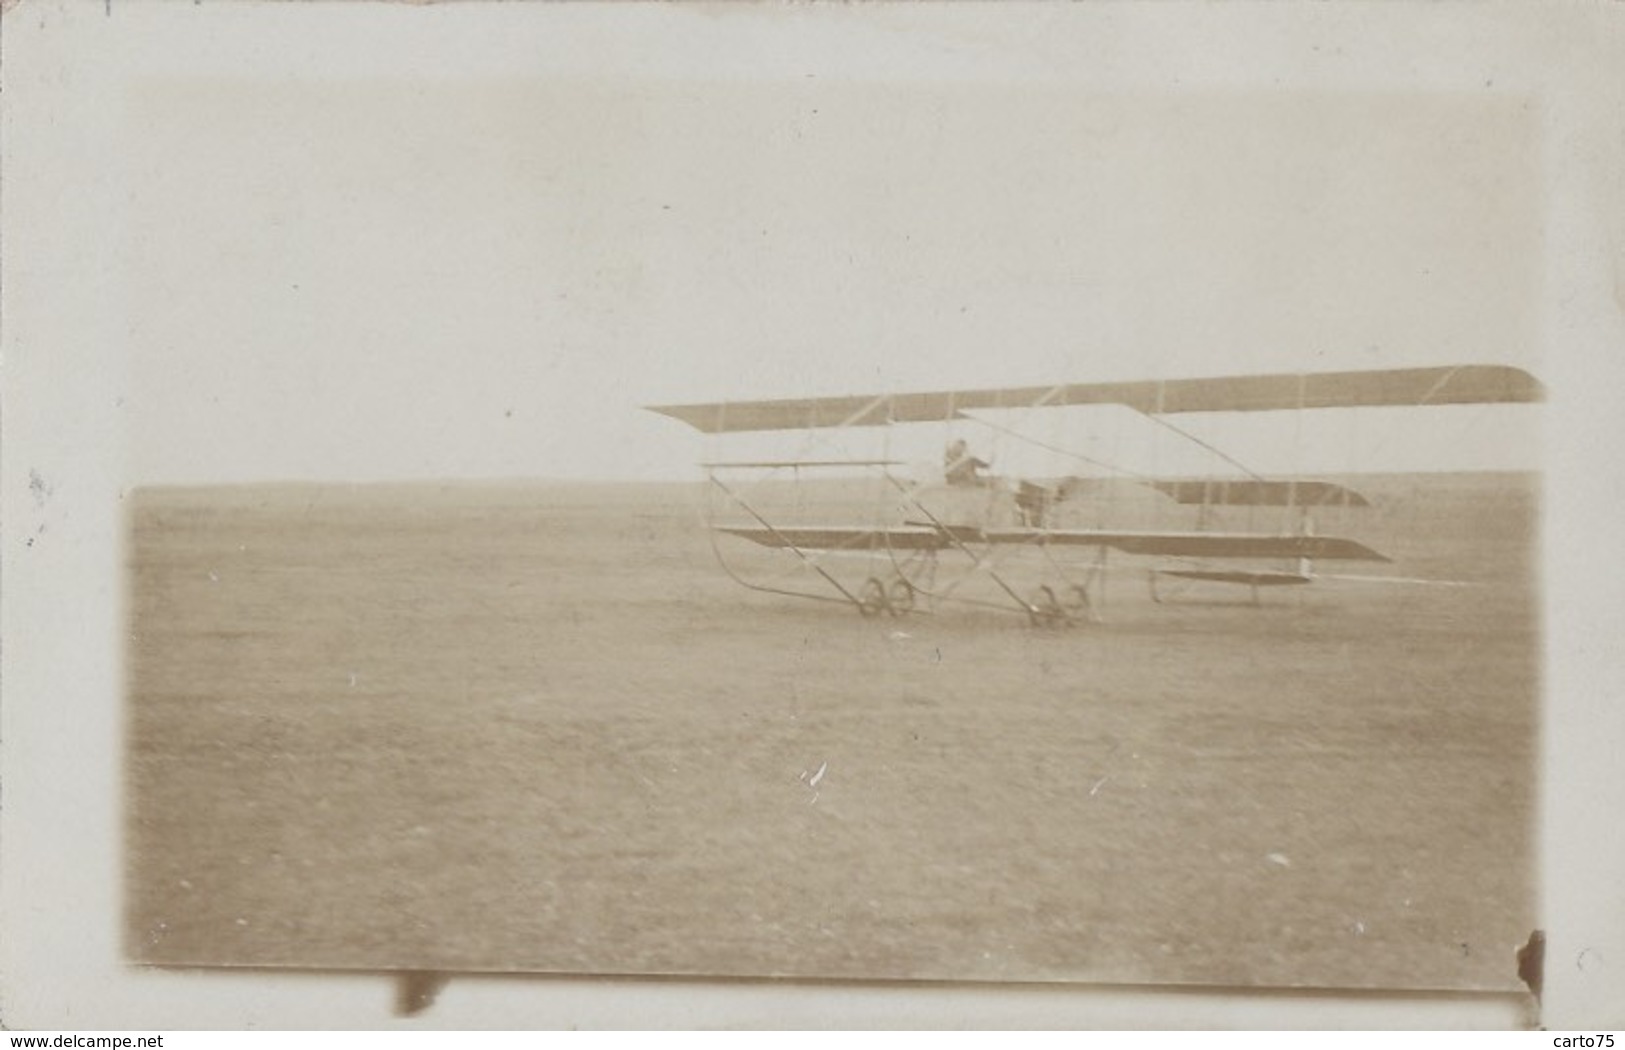 Aviation - Carte-Photo - Avion Biplan Farman - ....-1914: Precursors